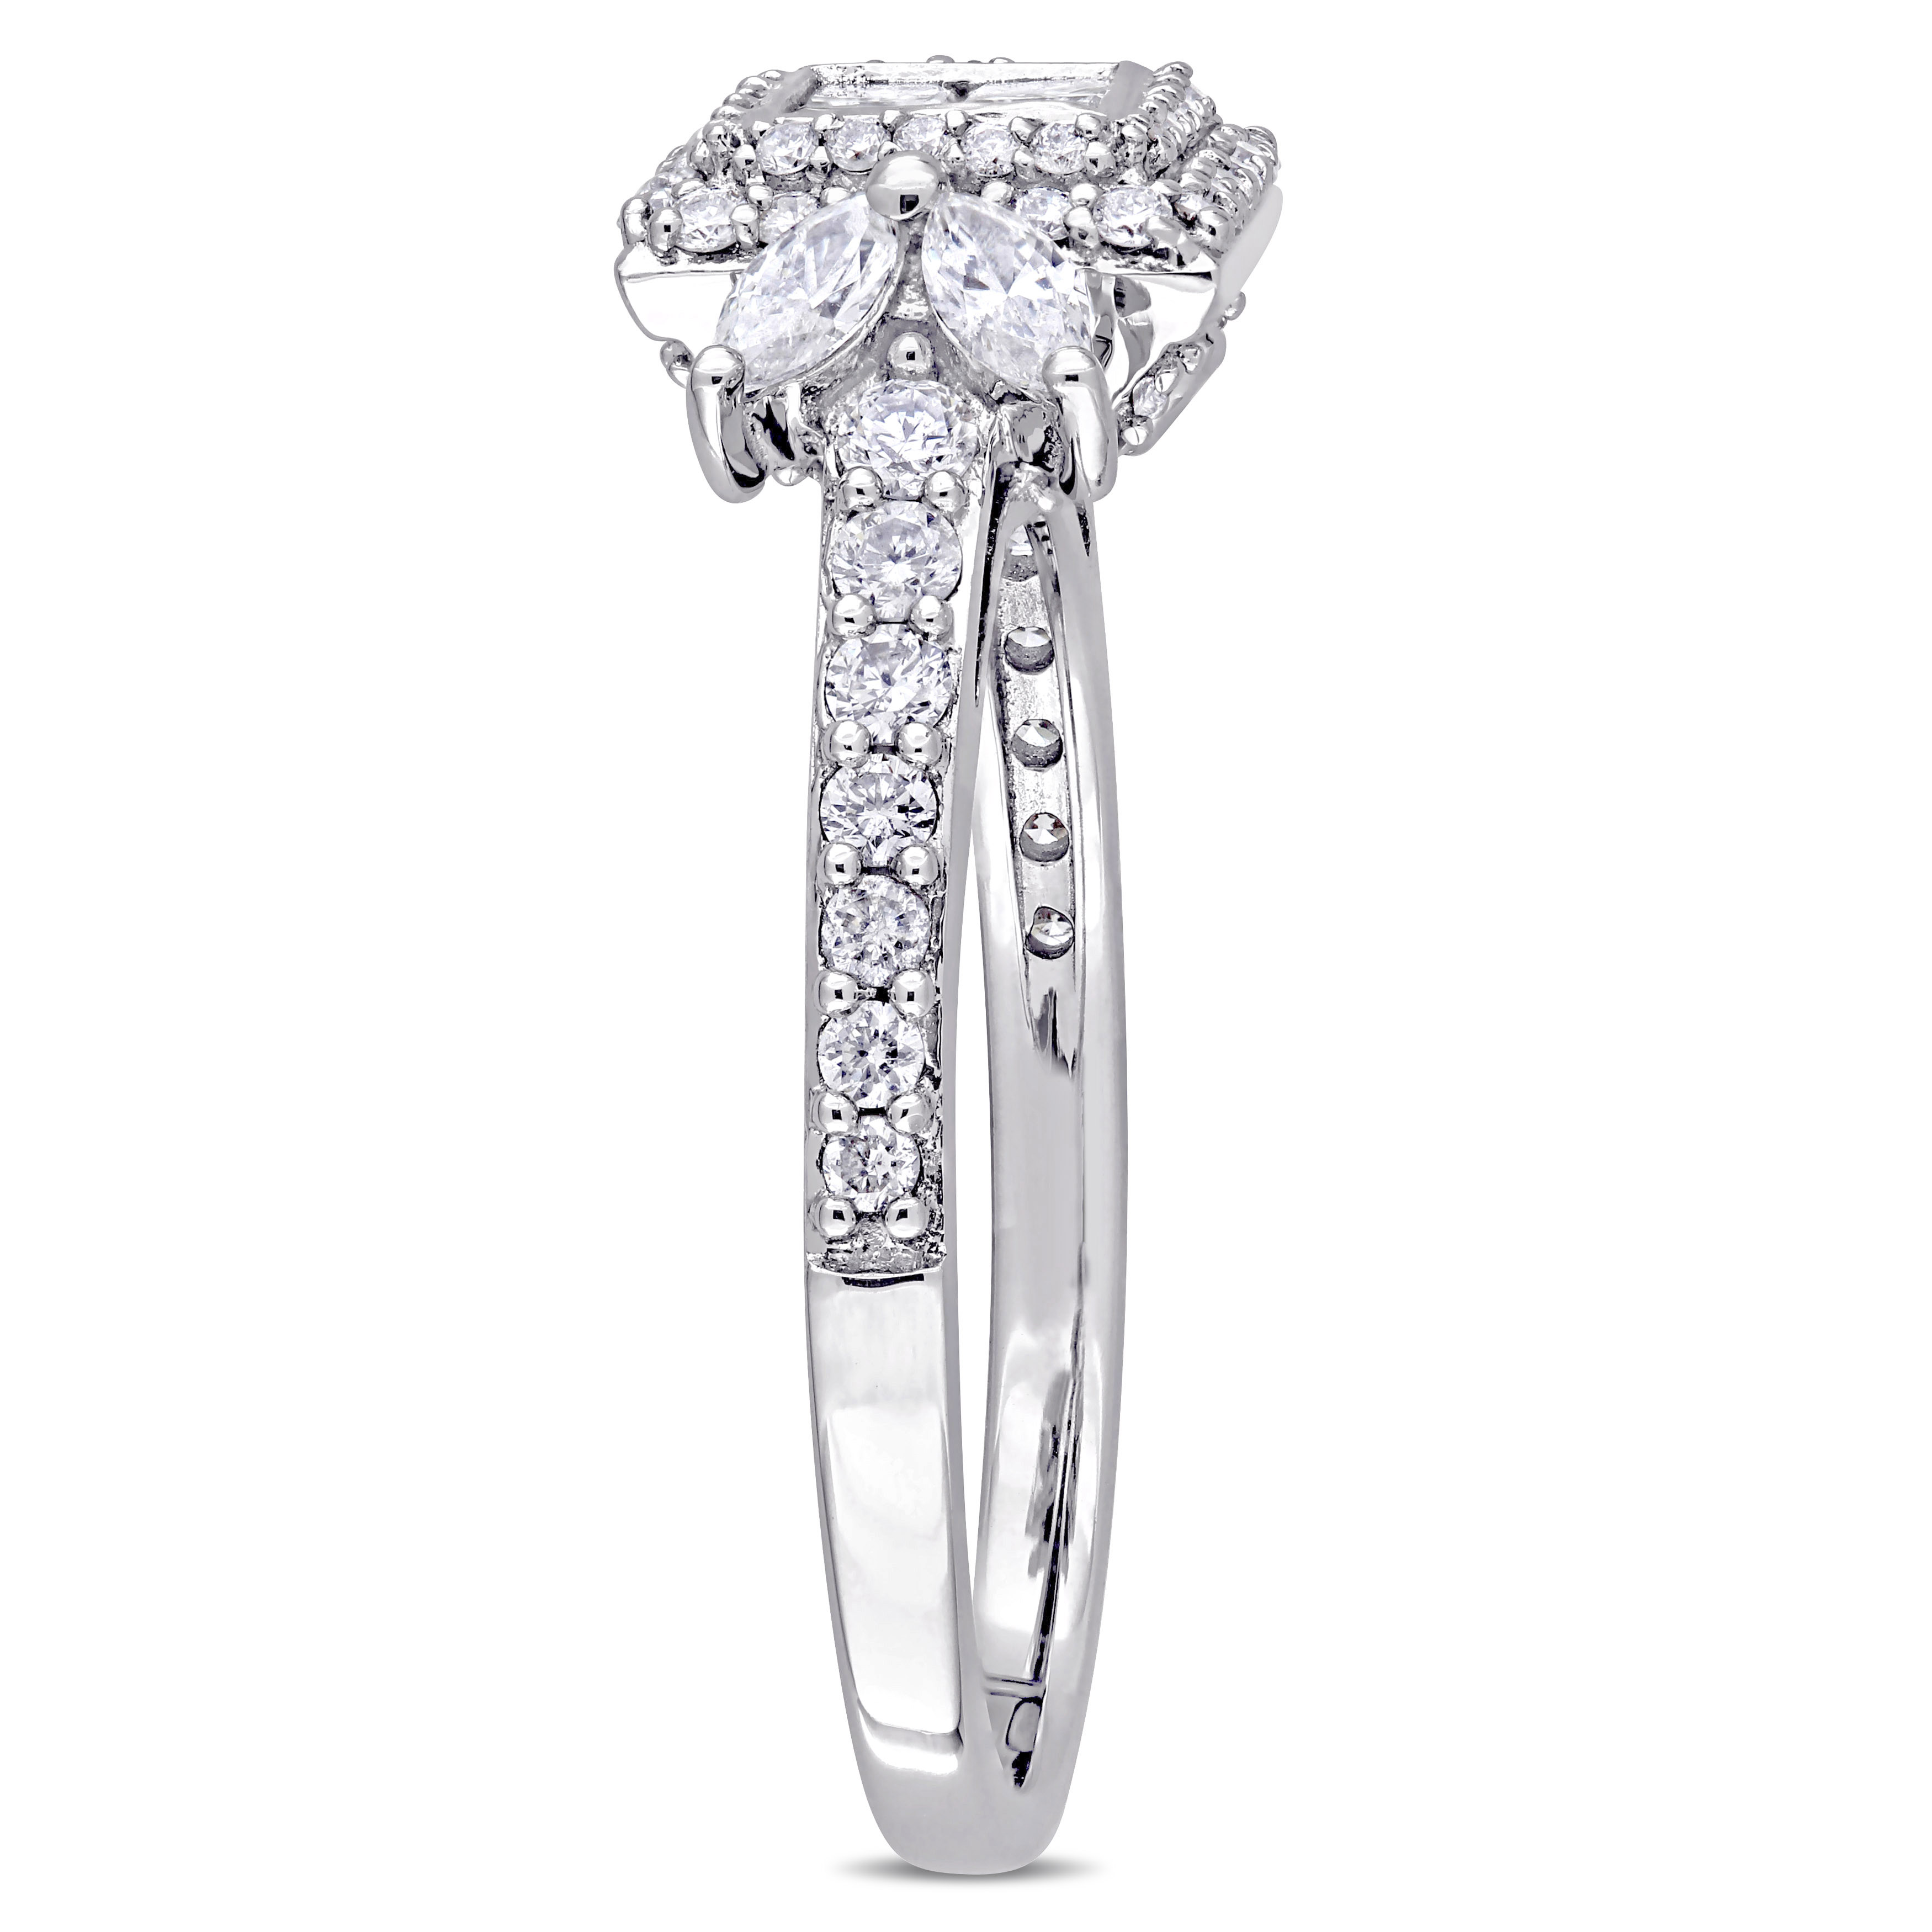 1 CT TW Princess-cut Diamond Quad Halo Engagement Ring in 14k White Gold